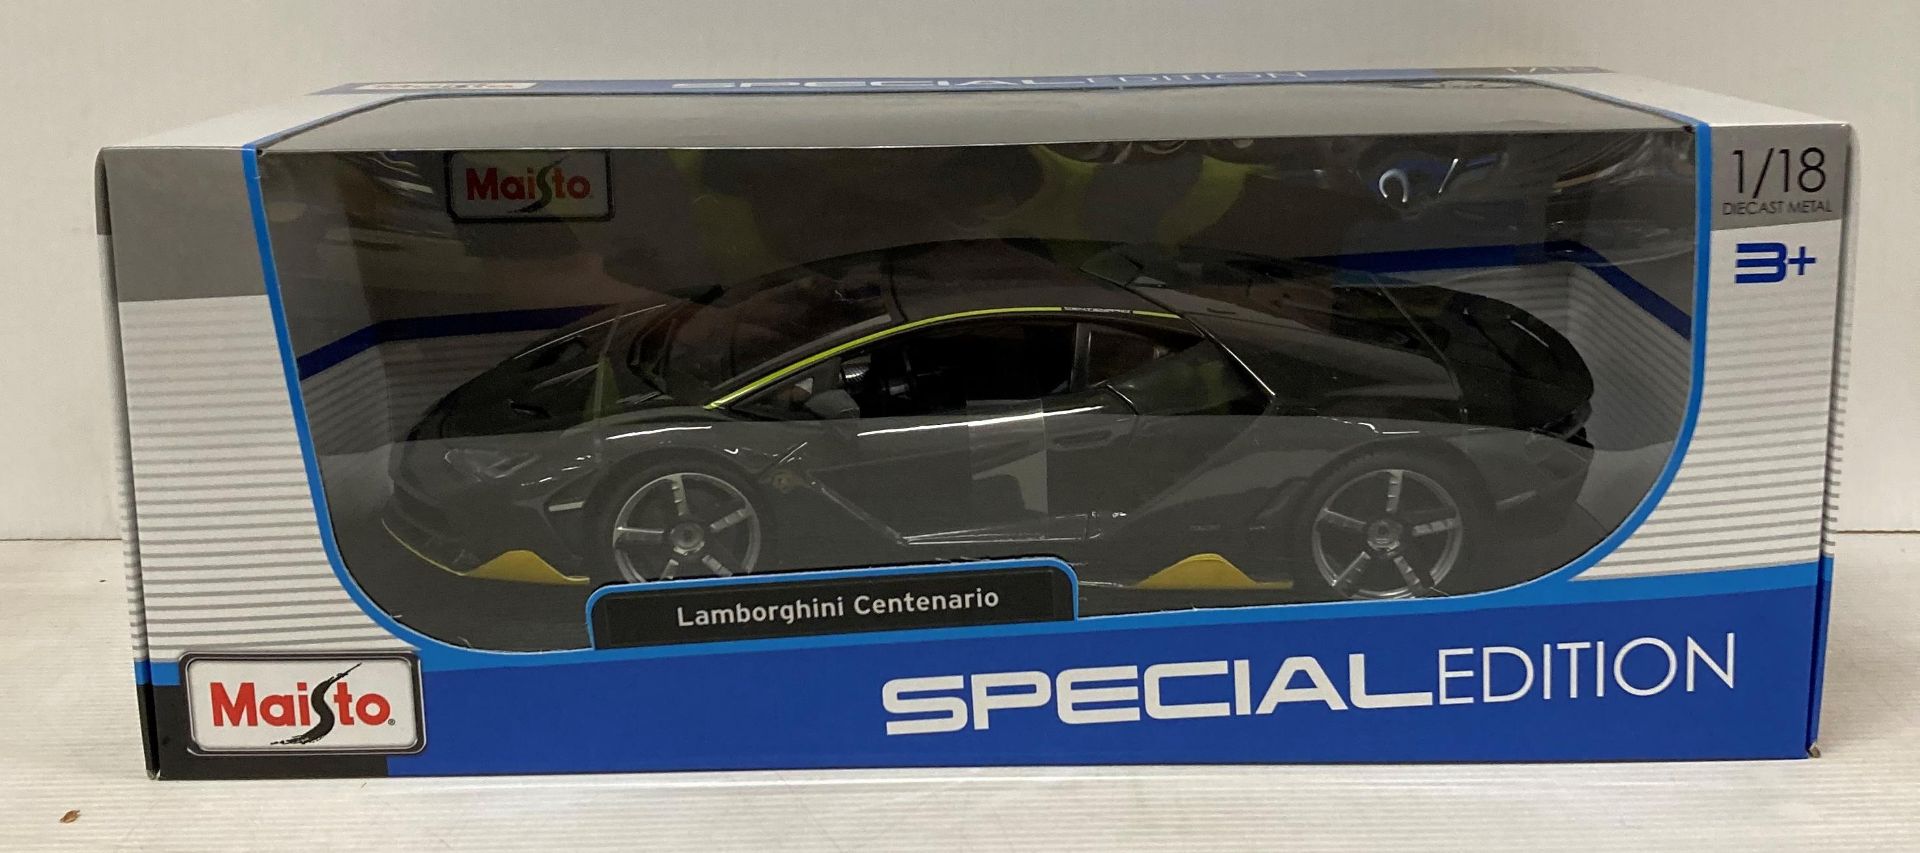 2 x Maisto Lamborghini Centenario Special Edition 1:18 scale diecast model cars RRP £45 each